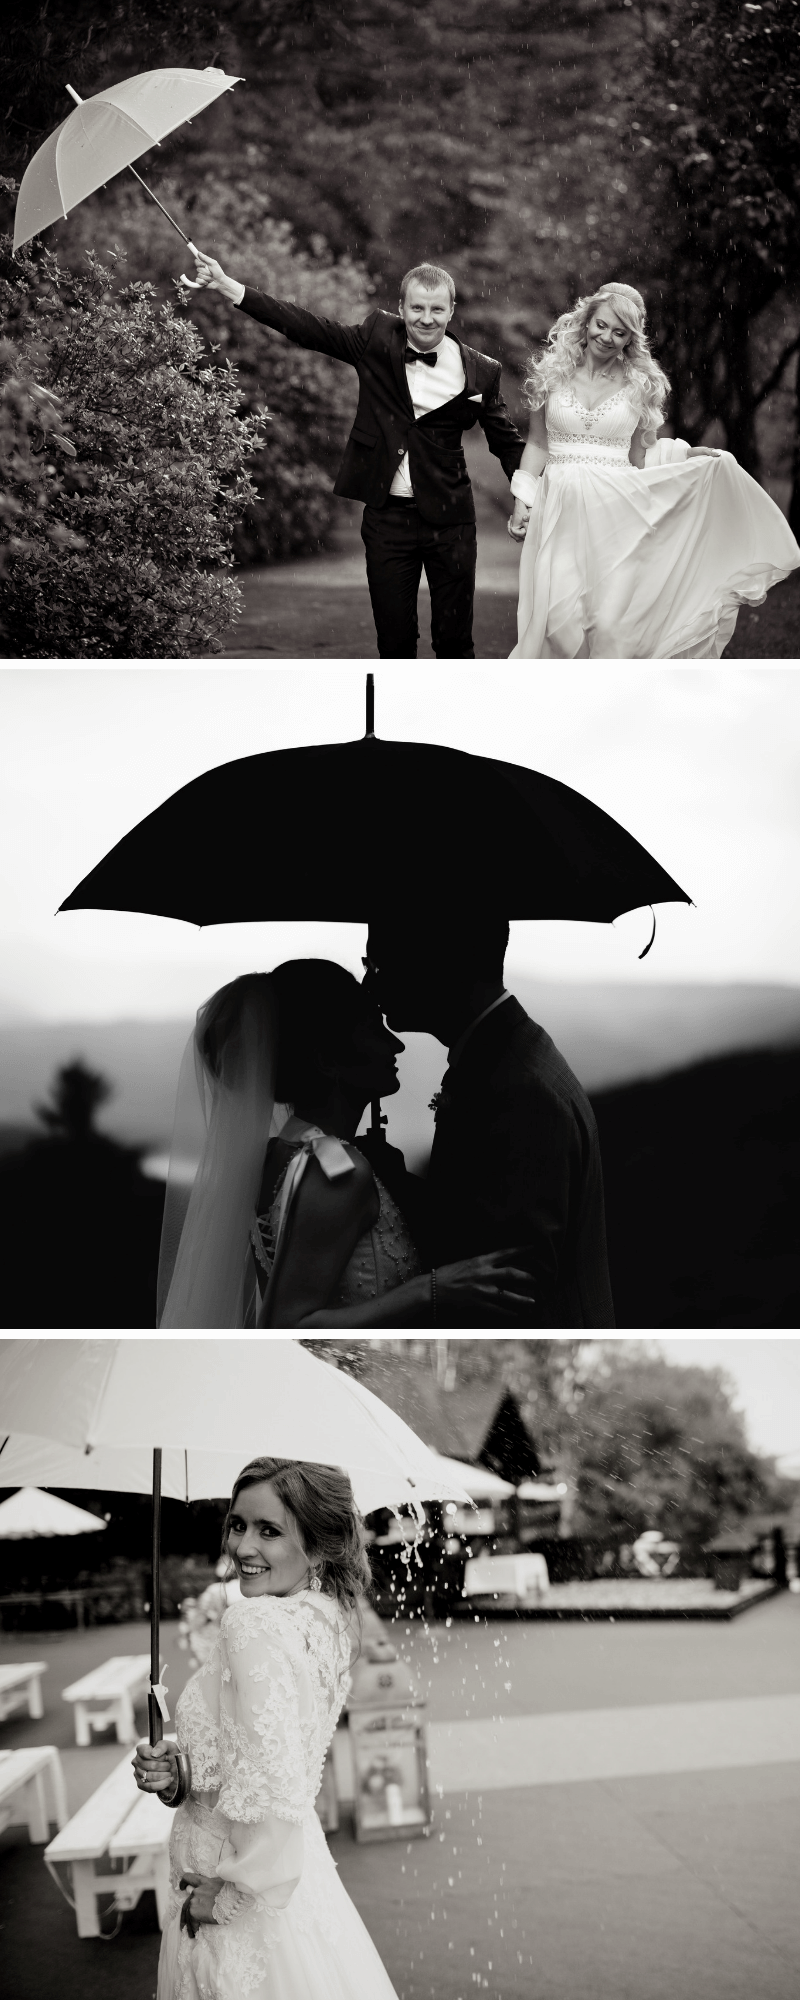 Hochzeitsfotos bei Regen Ideen